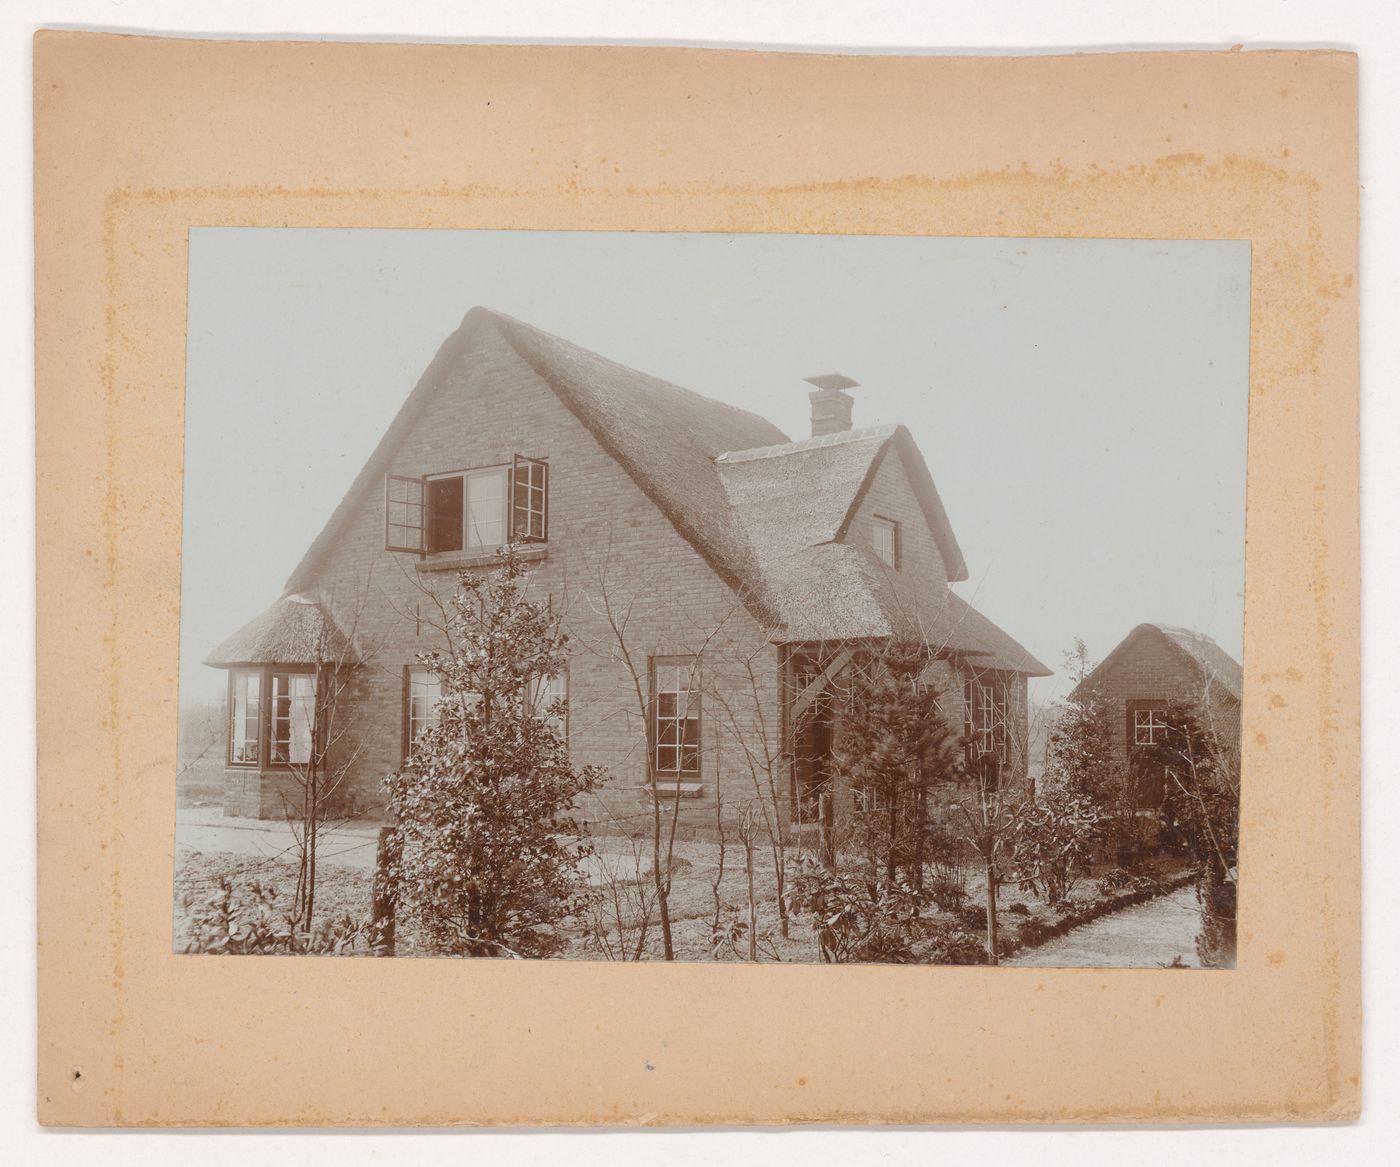 View of the house for Mr. and Mrs. van Essen-Vincker from the garden, Blaricum, Netherlands